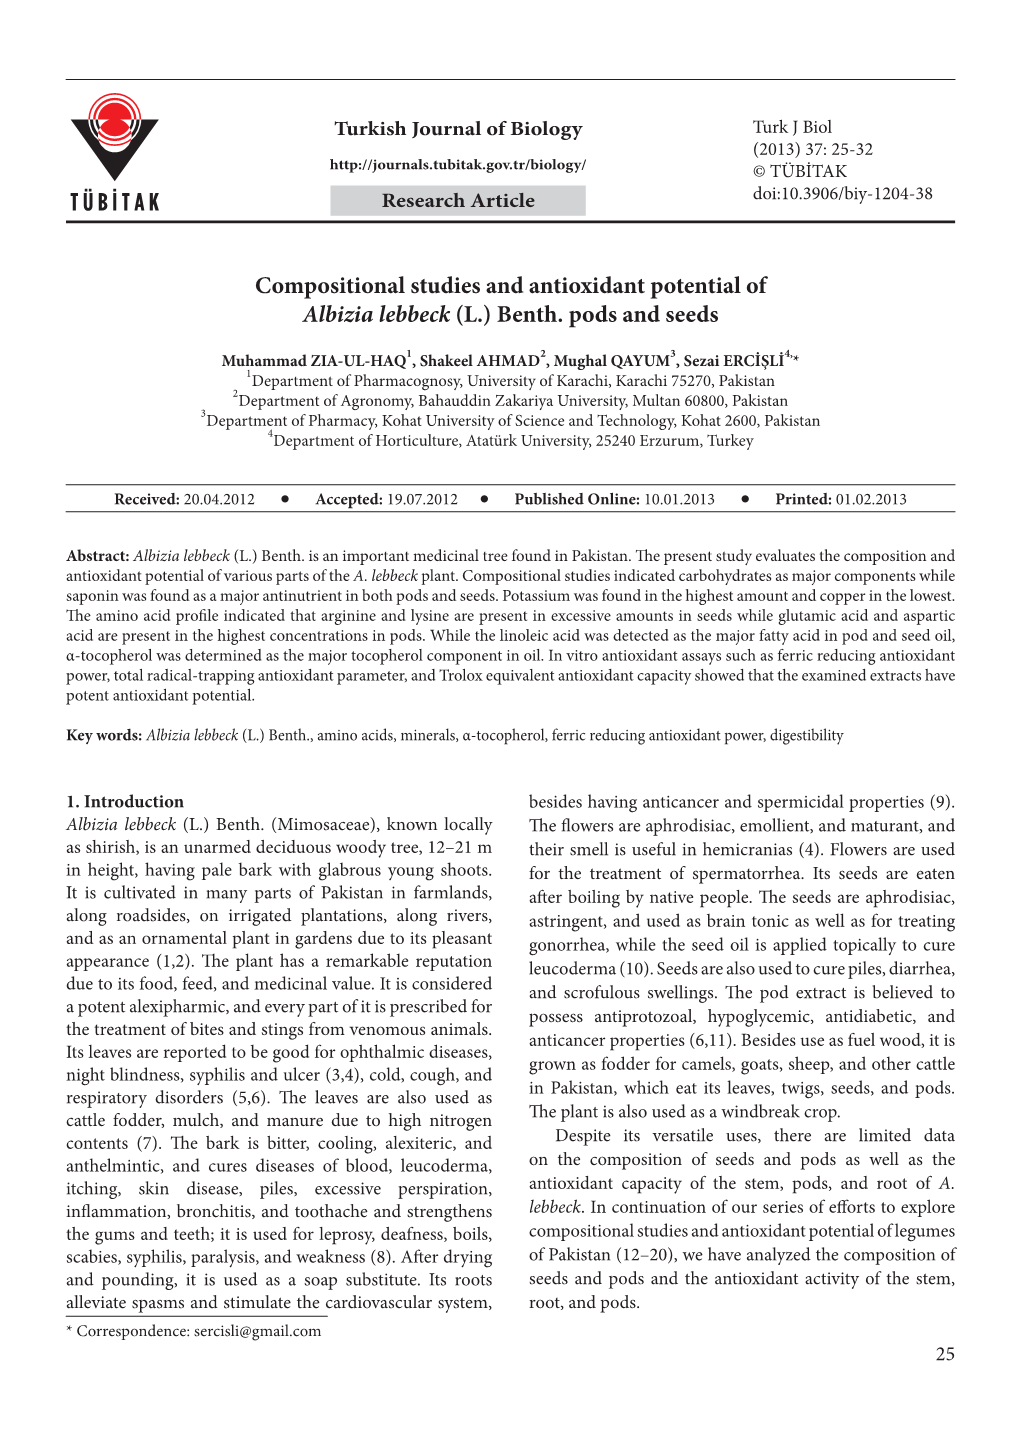 Compositional Studies and Antioxidant Potential of Albizia Lebbeck (L.) Benth